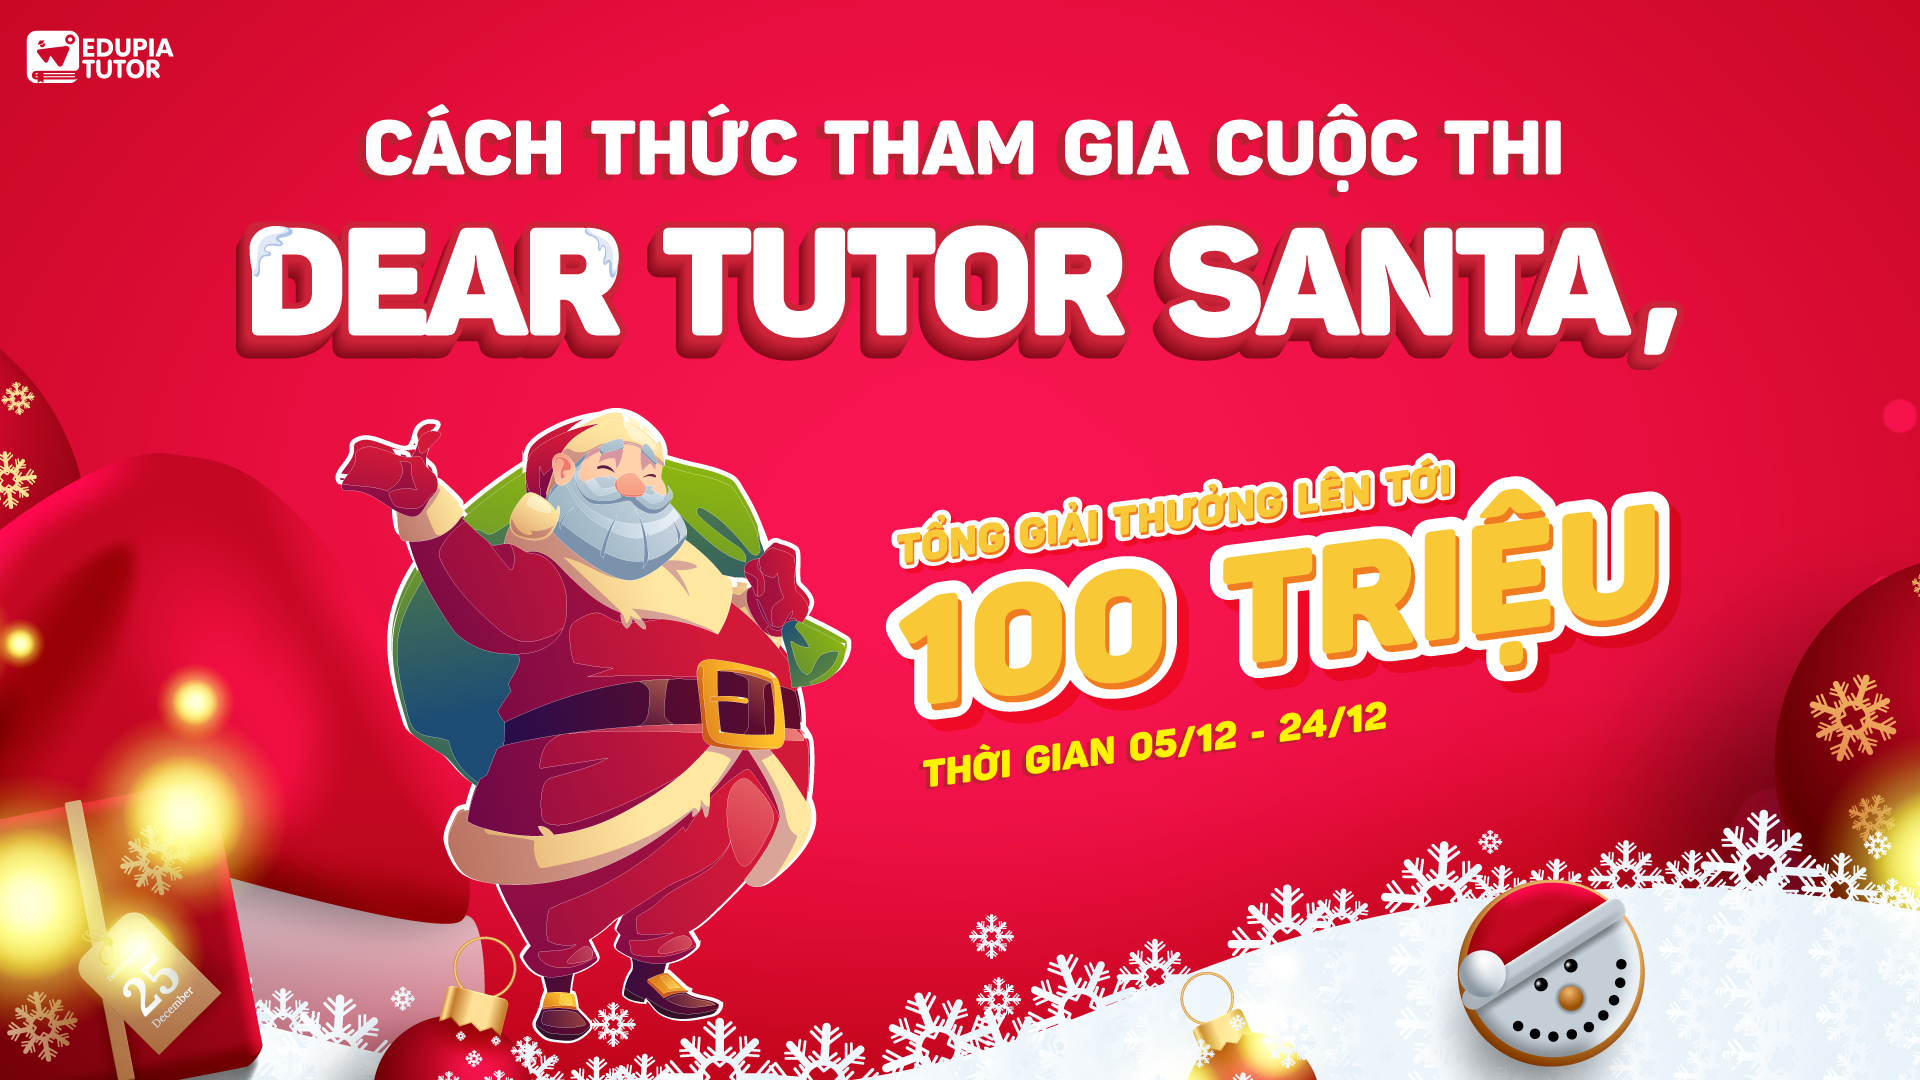 Hướng dẫn cách tham gia cuộc thi “DEAR TUTOR SANTA,” – TELL ME ABOUT YOUR CHRISTMAS WISHES